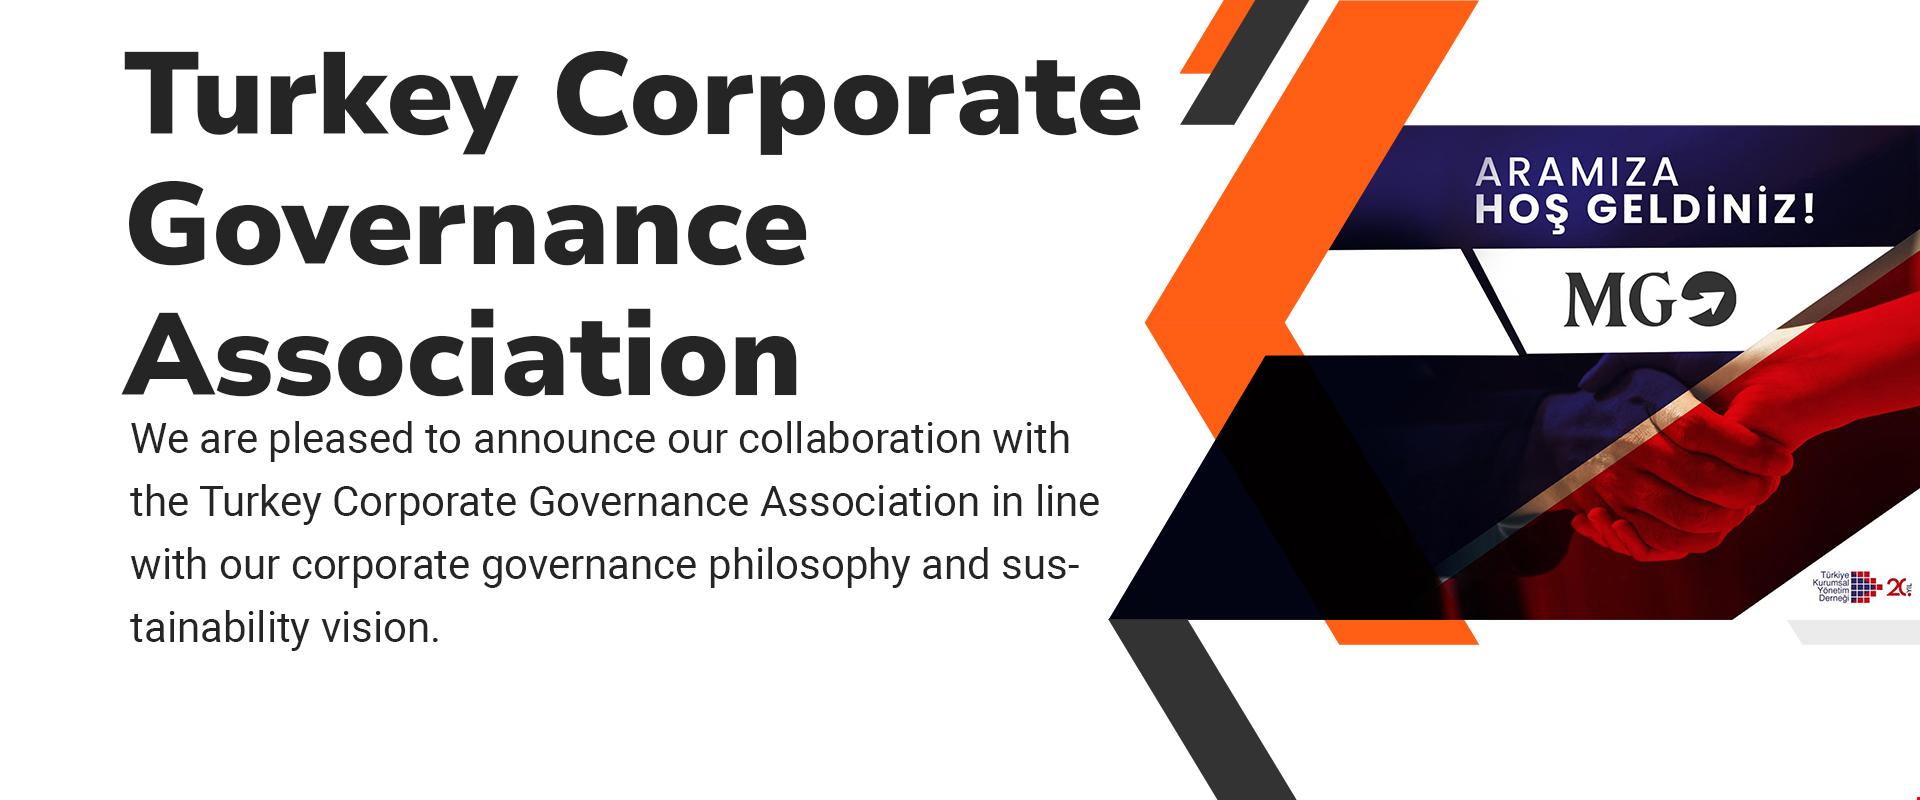 Turkey Corporate Governance Association